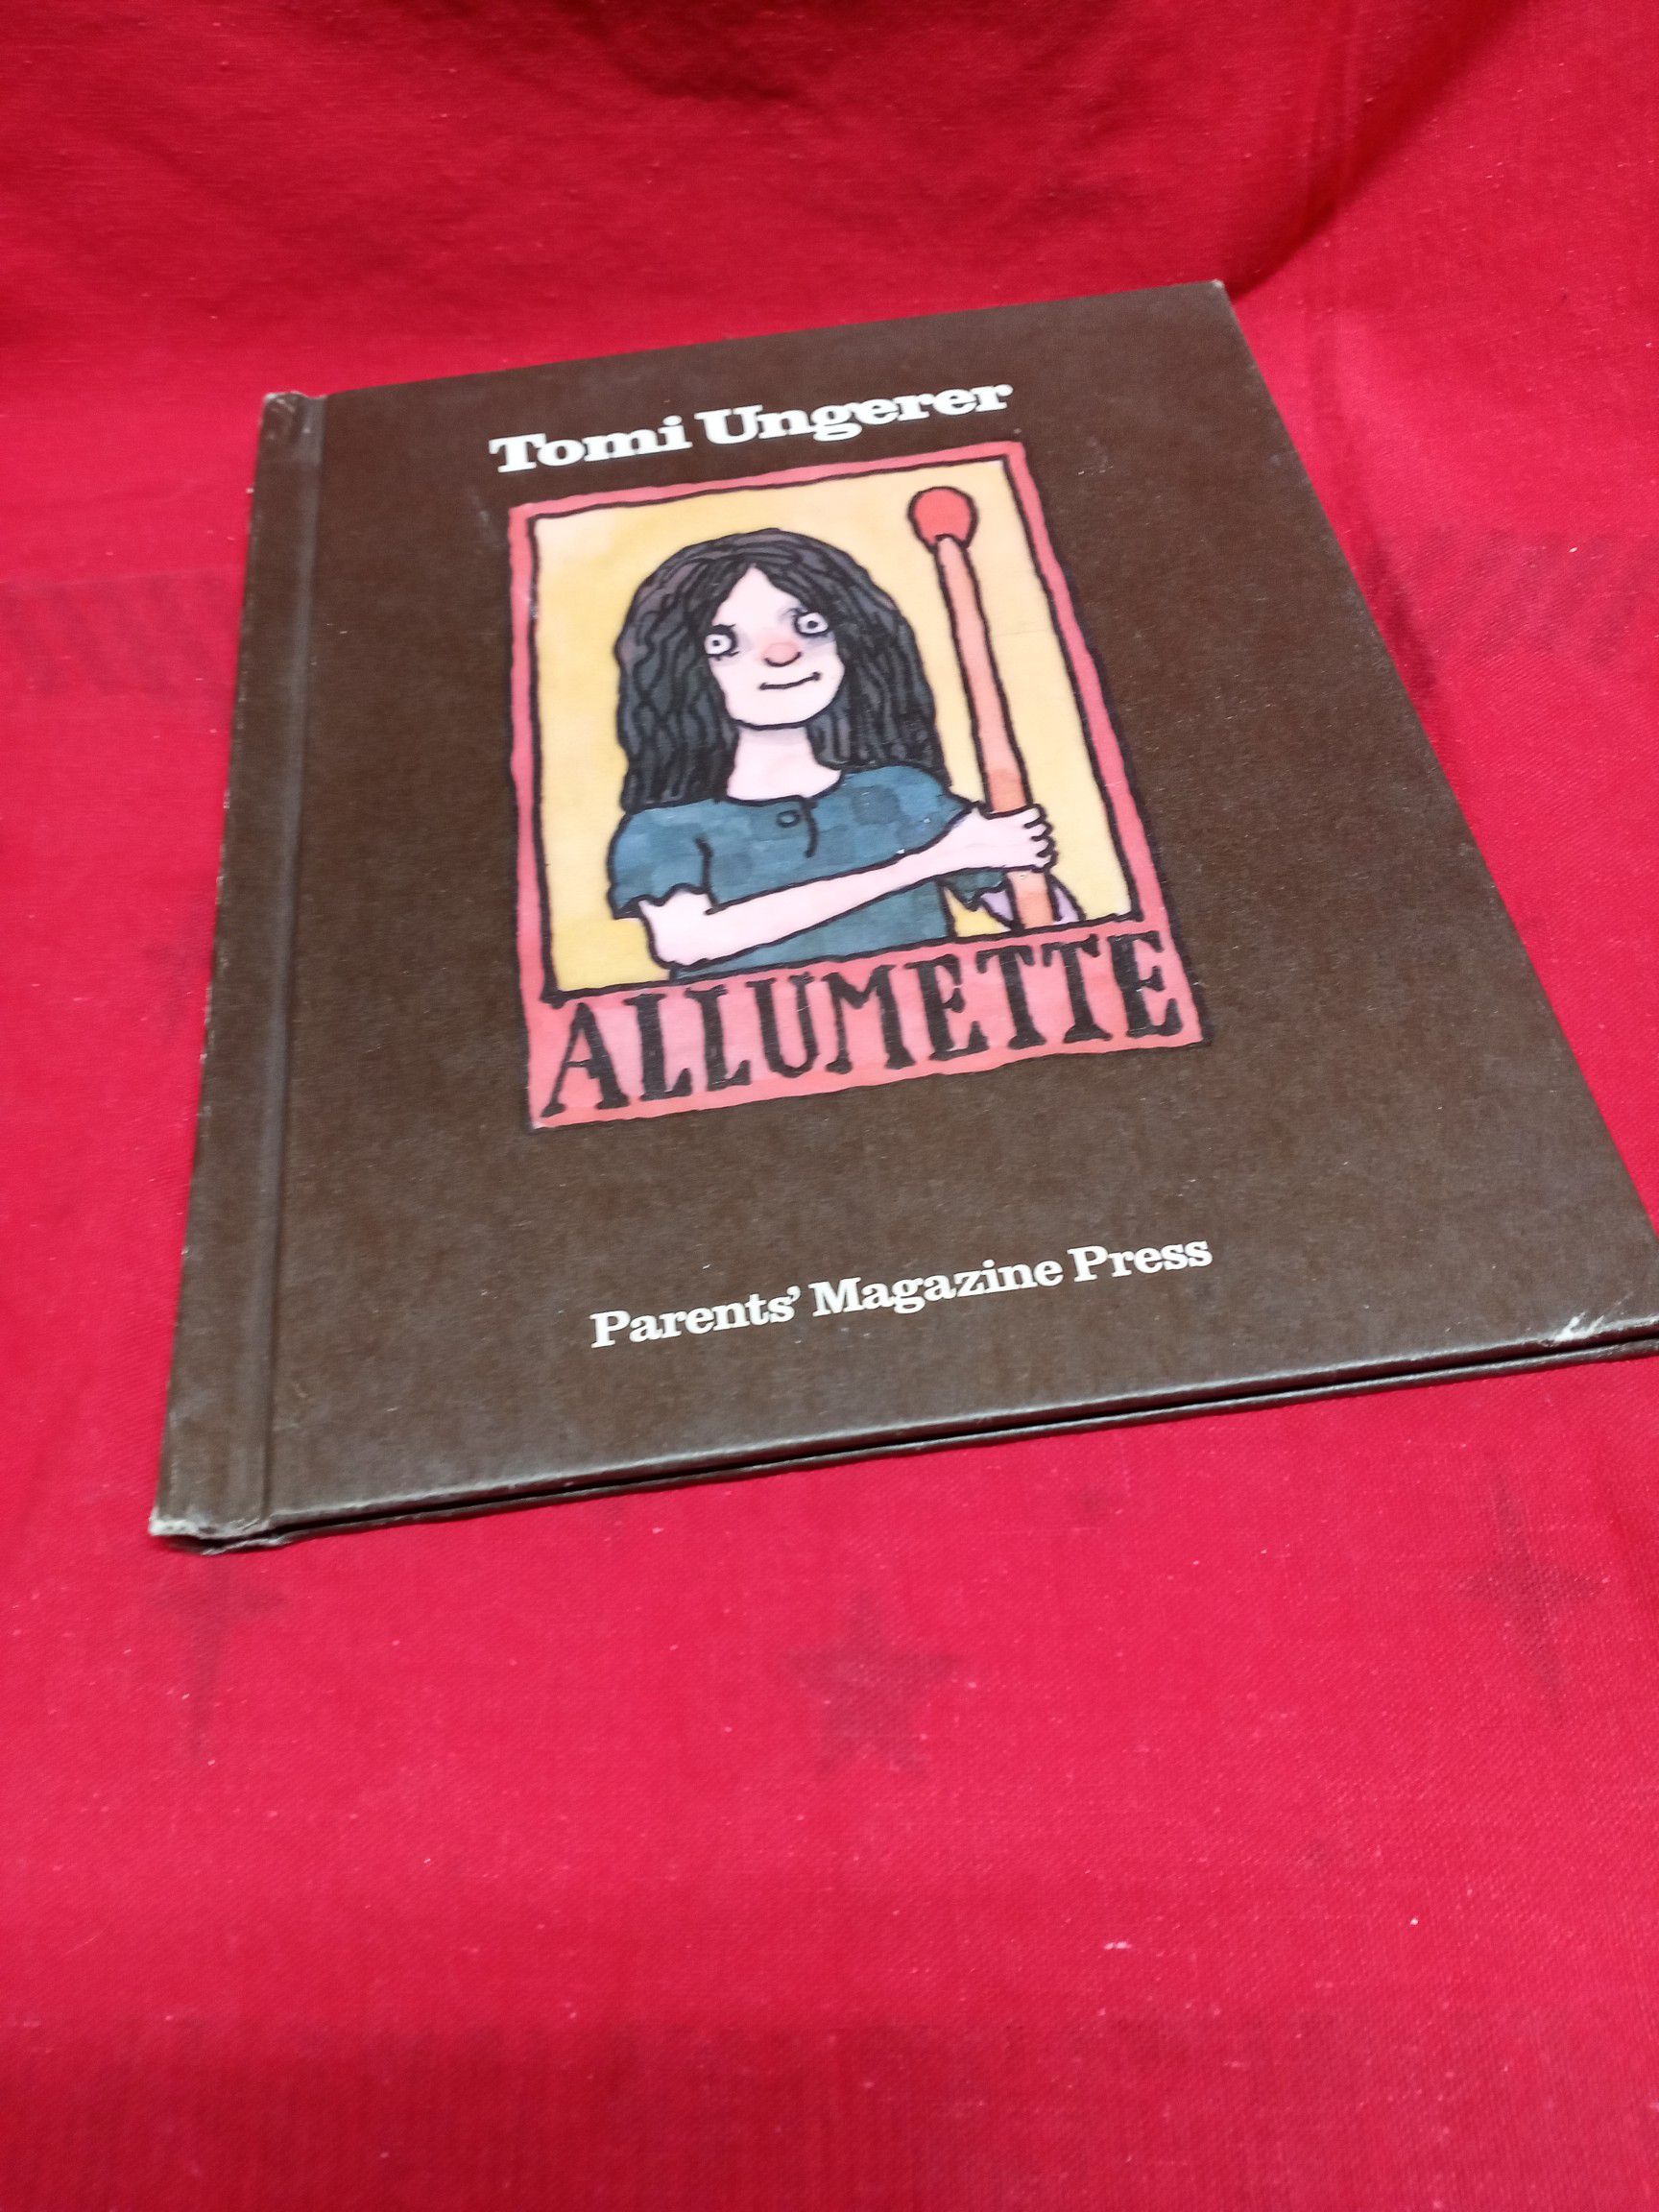 Vintage 1974 Tomi Ungerer "Allumette"